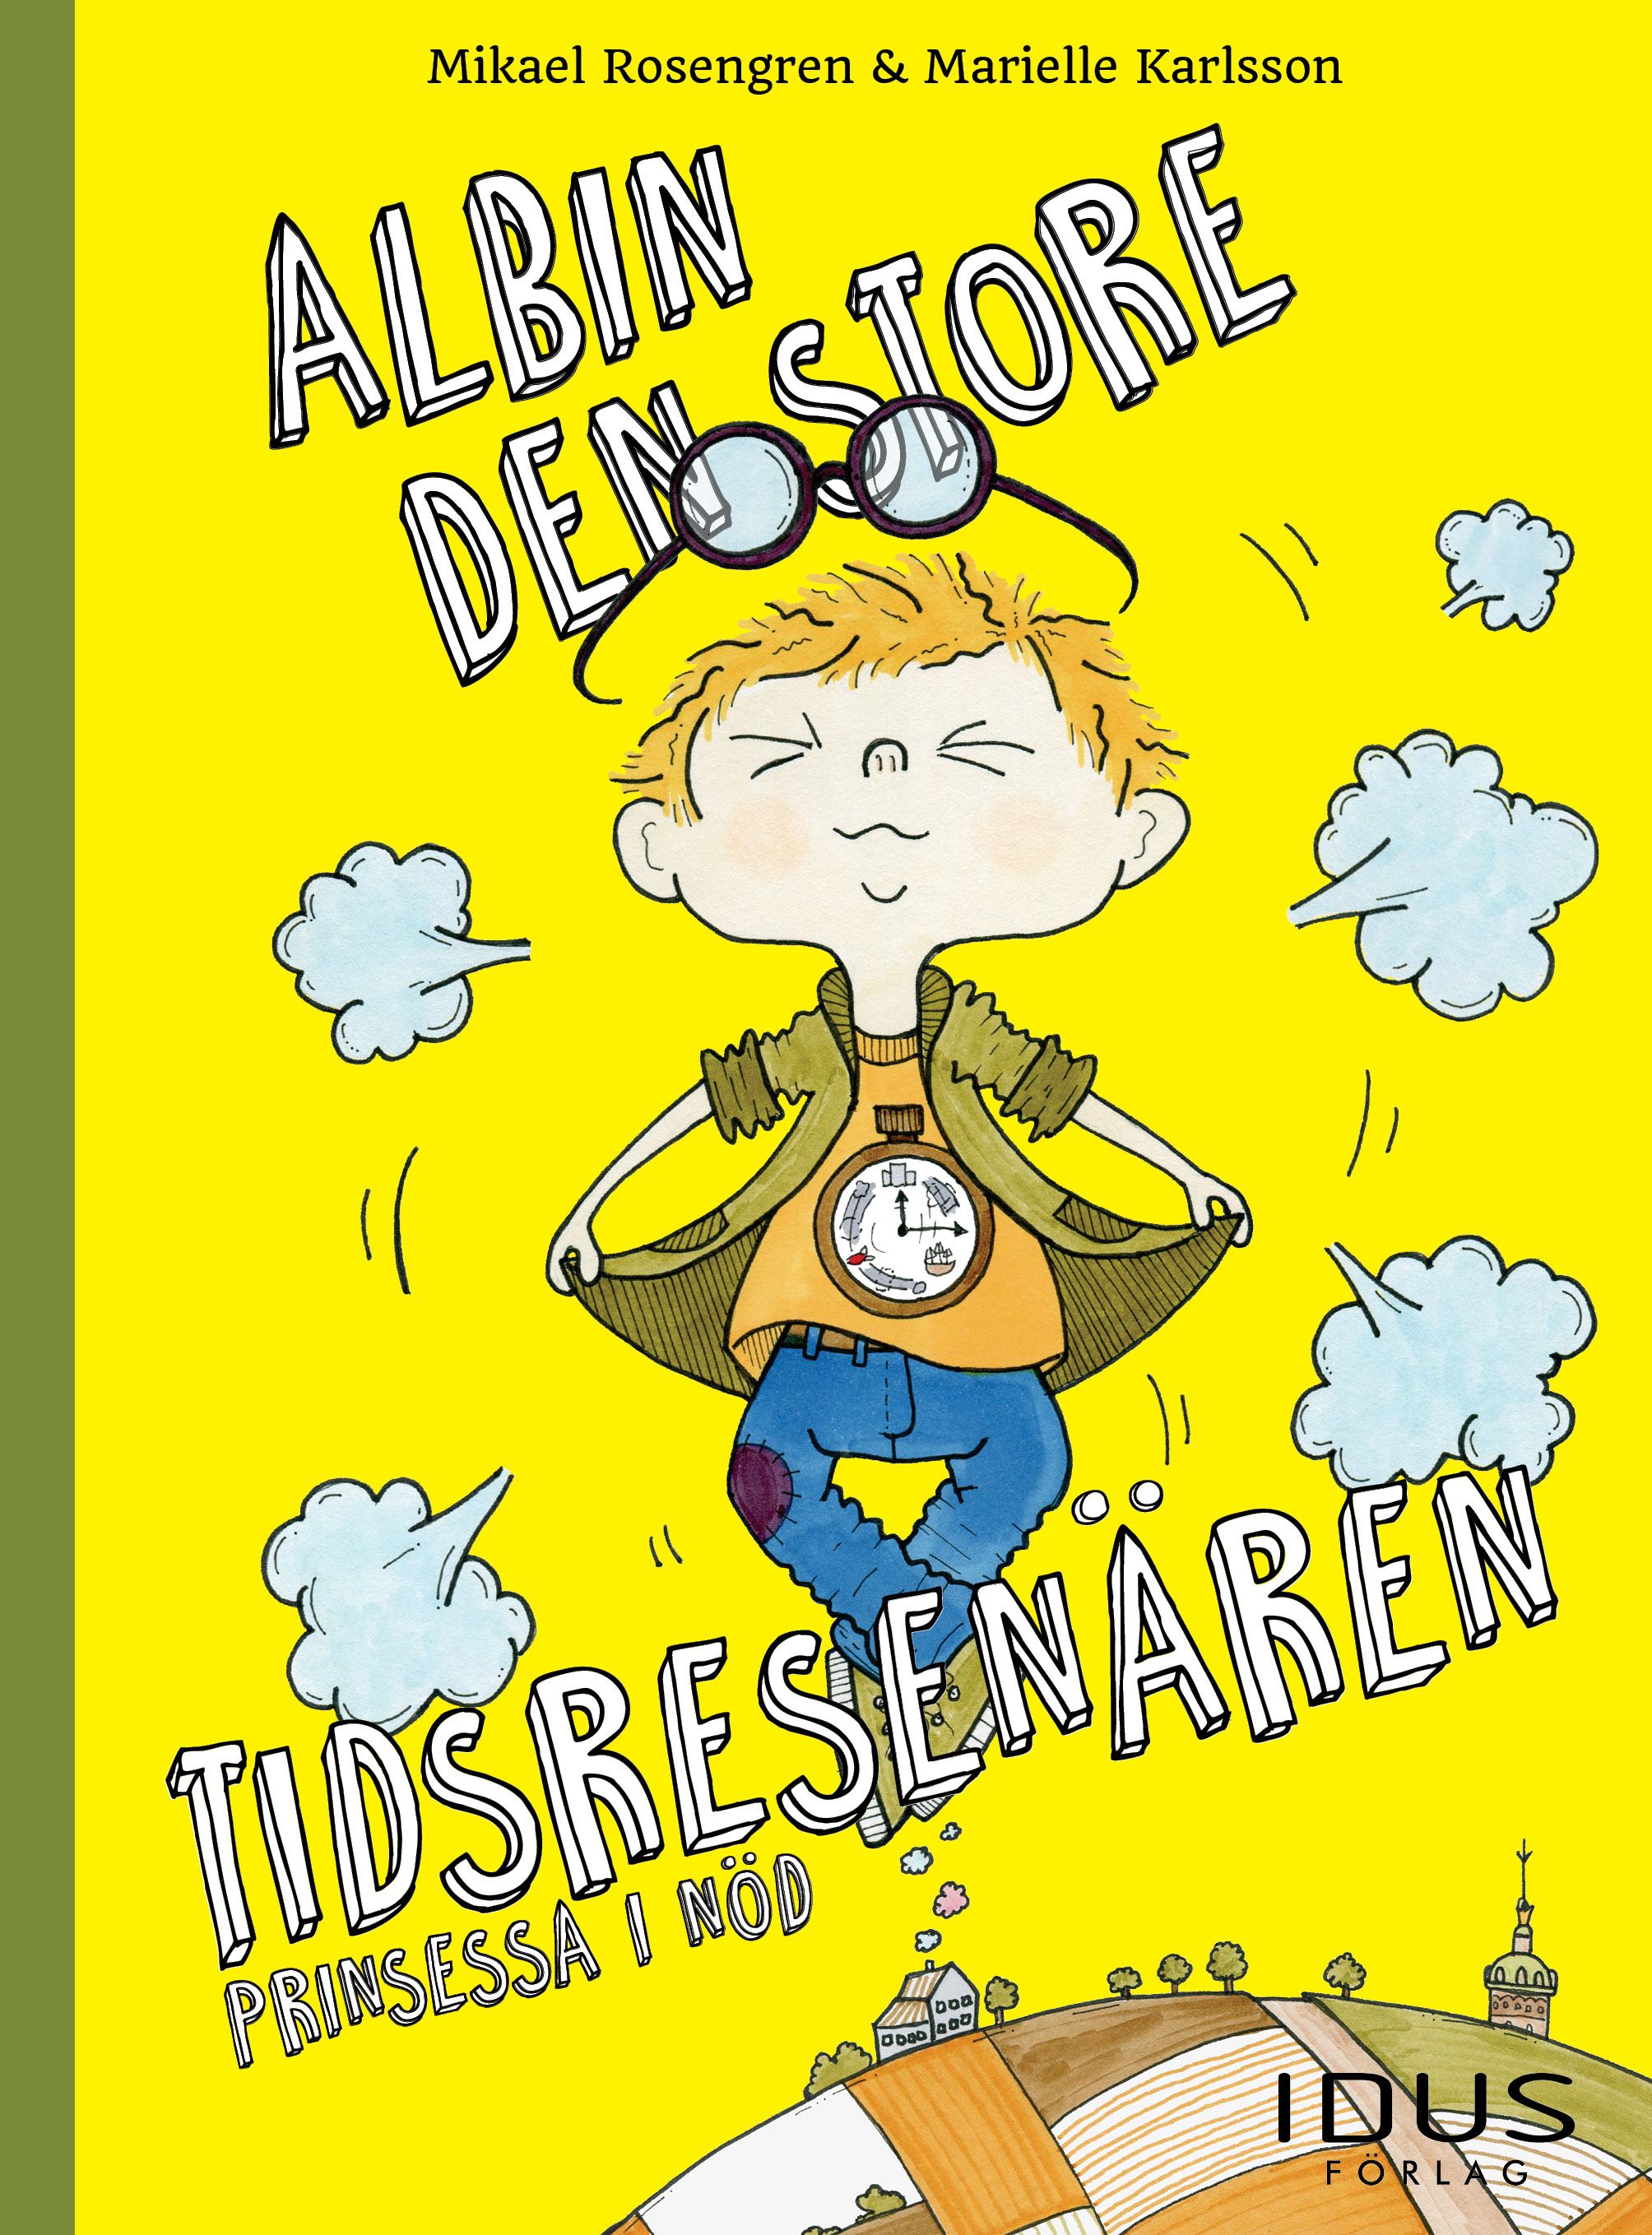 Albin, den store tidsresenären - Prinsessa i nöd, eBook by Mikael Rosengren